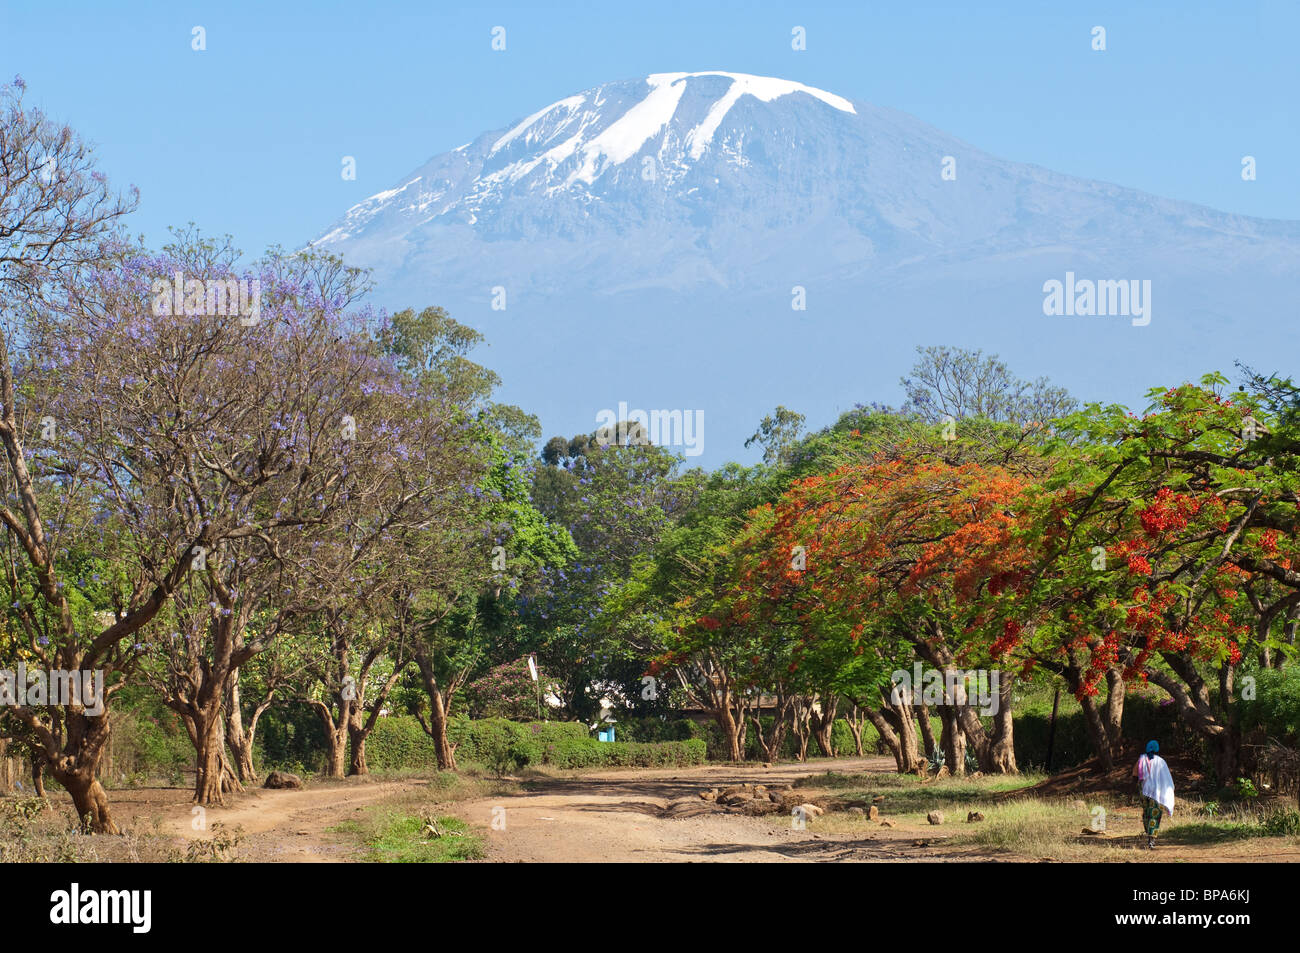 Kilimanjaro Alley with Flame trees Delonix regia in Moshi Tazania Stock Photo